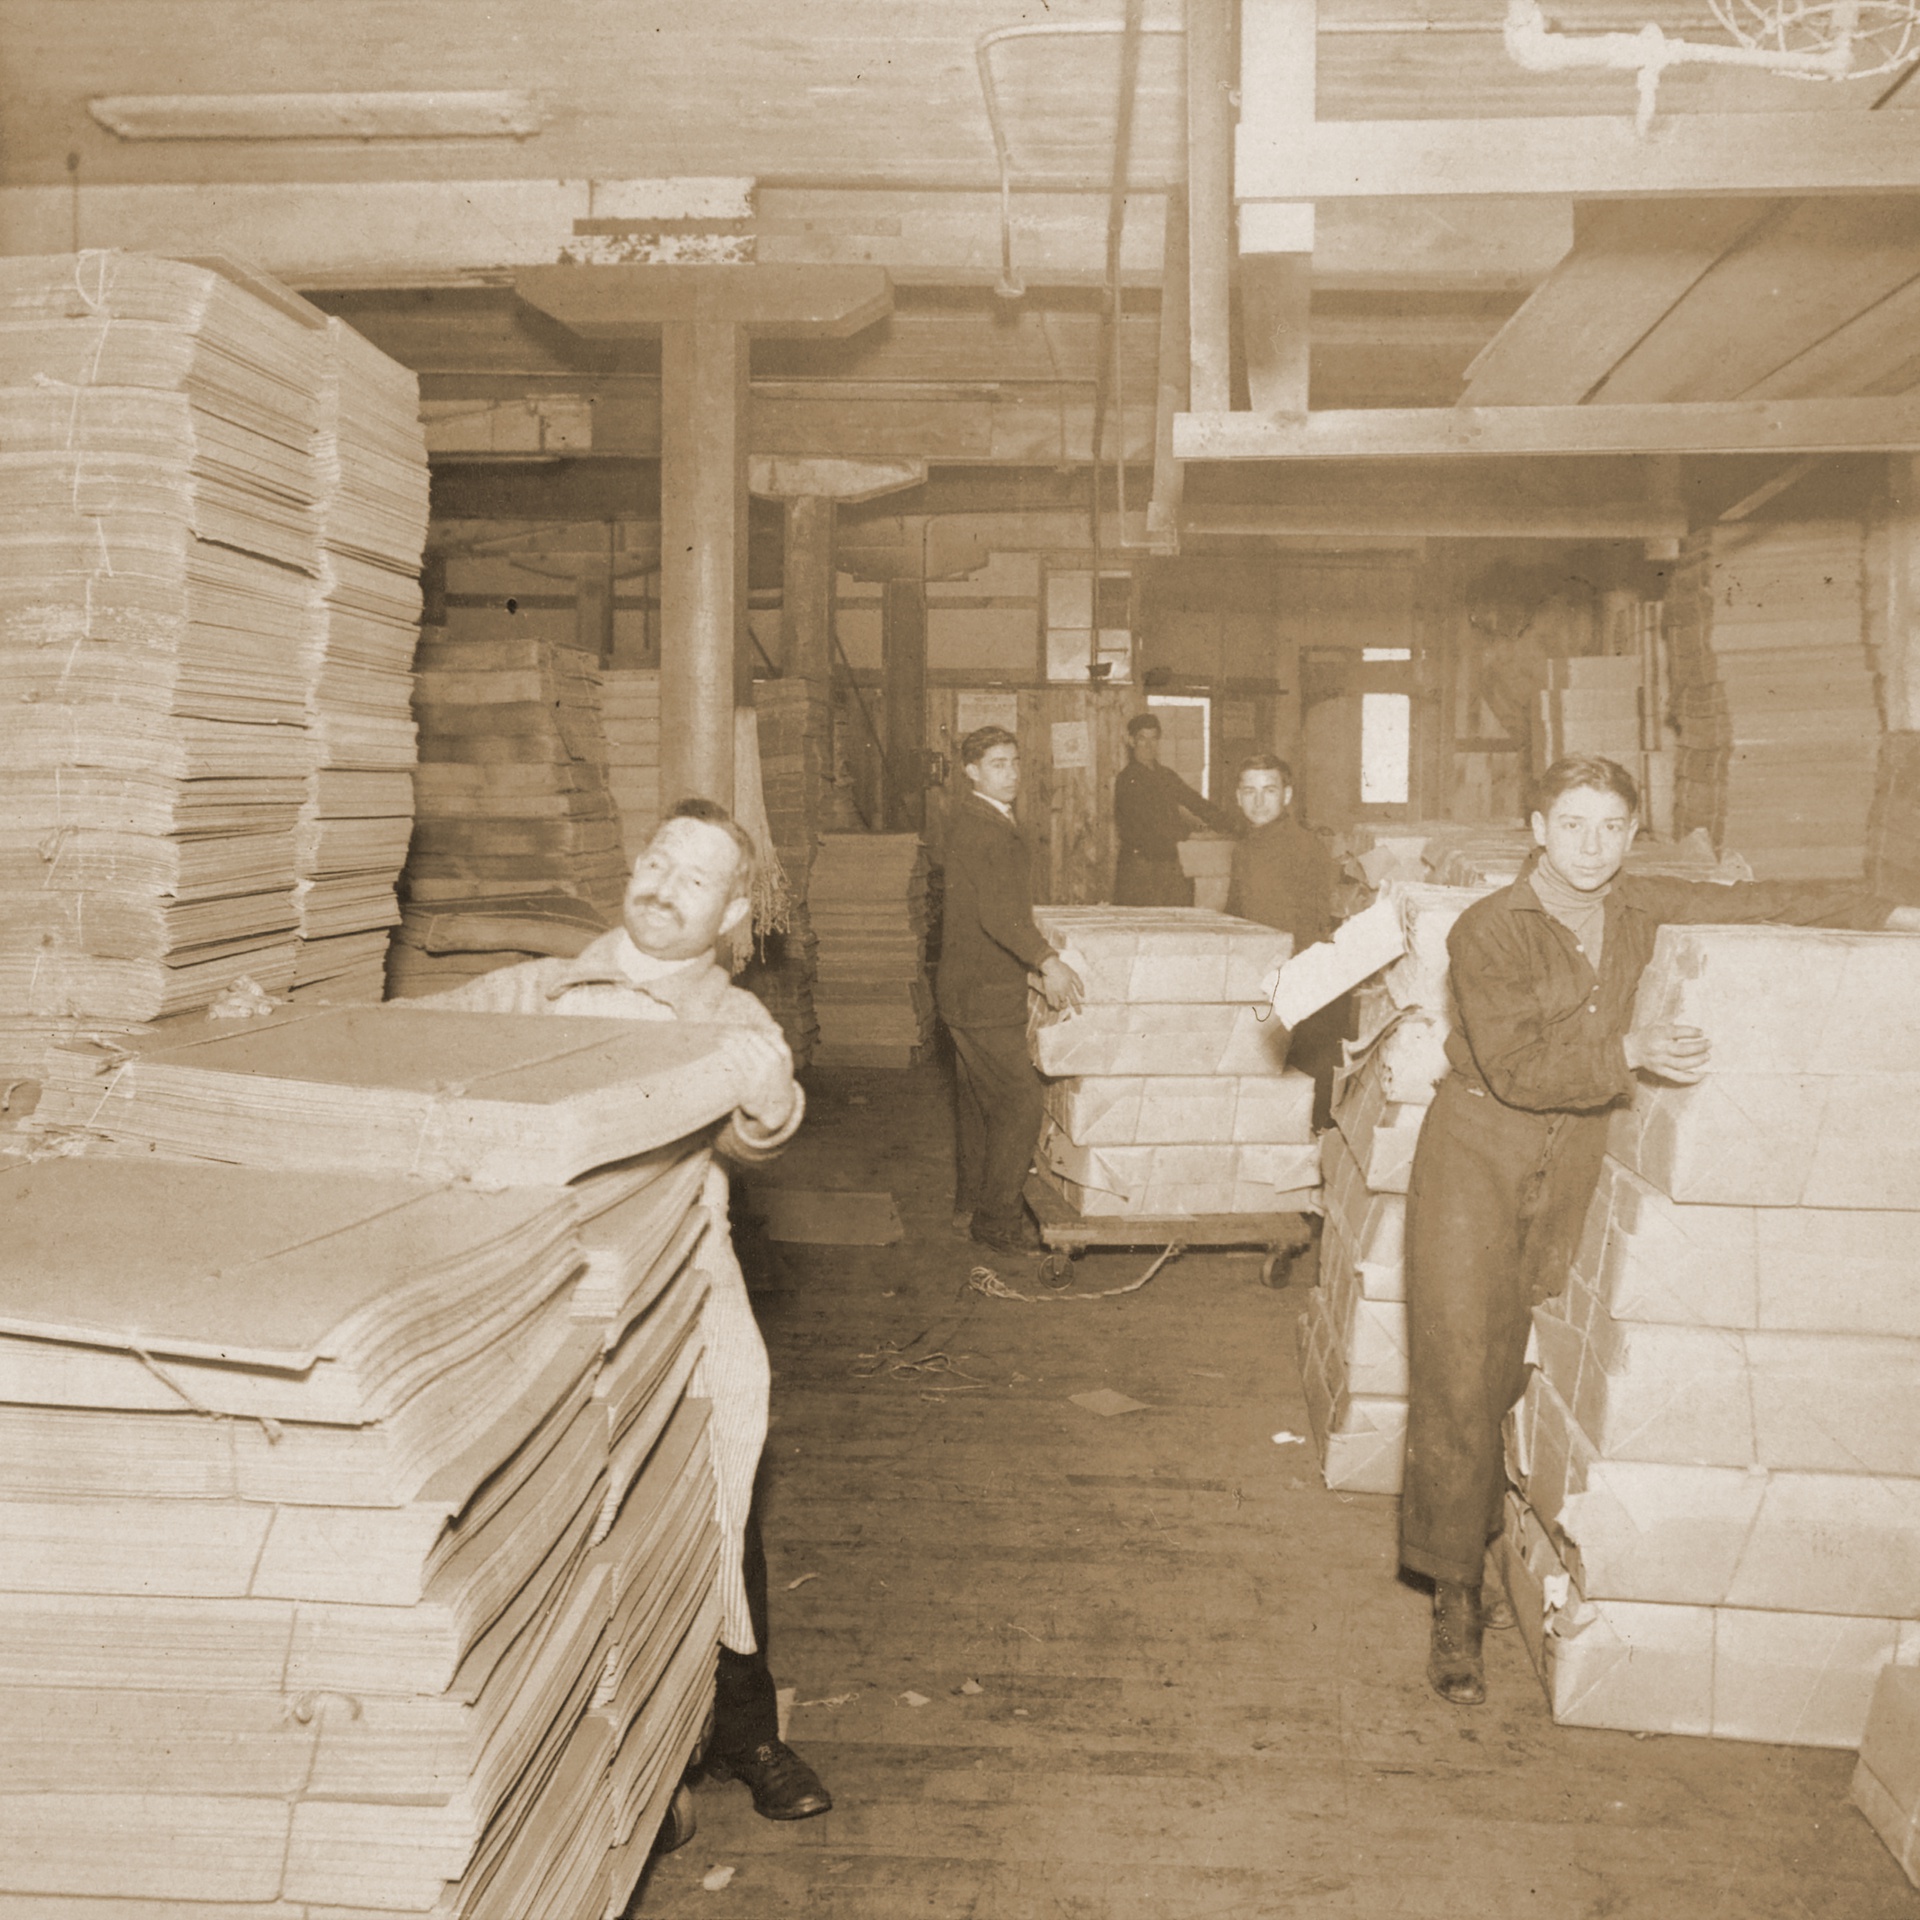 Diamond Packaging folding carton plant in Rochester, NY